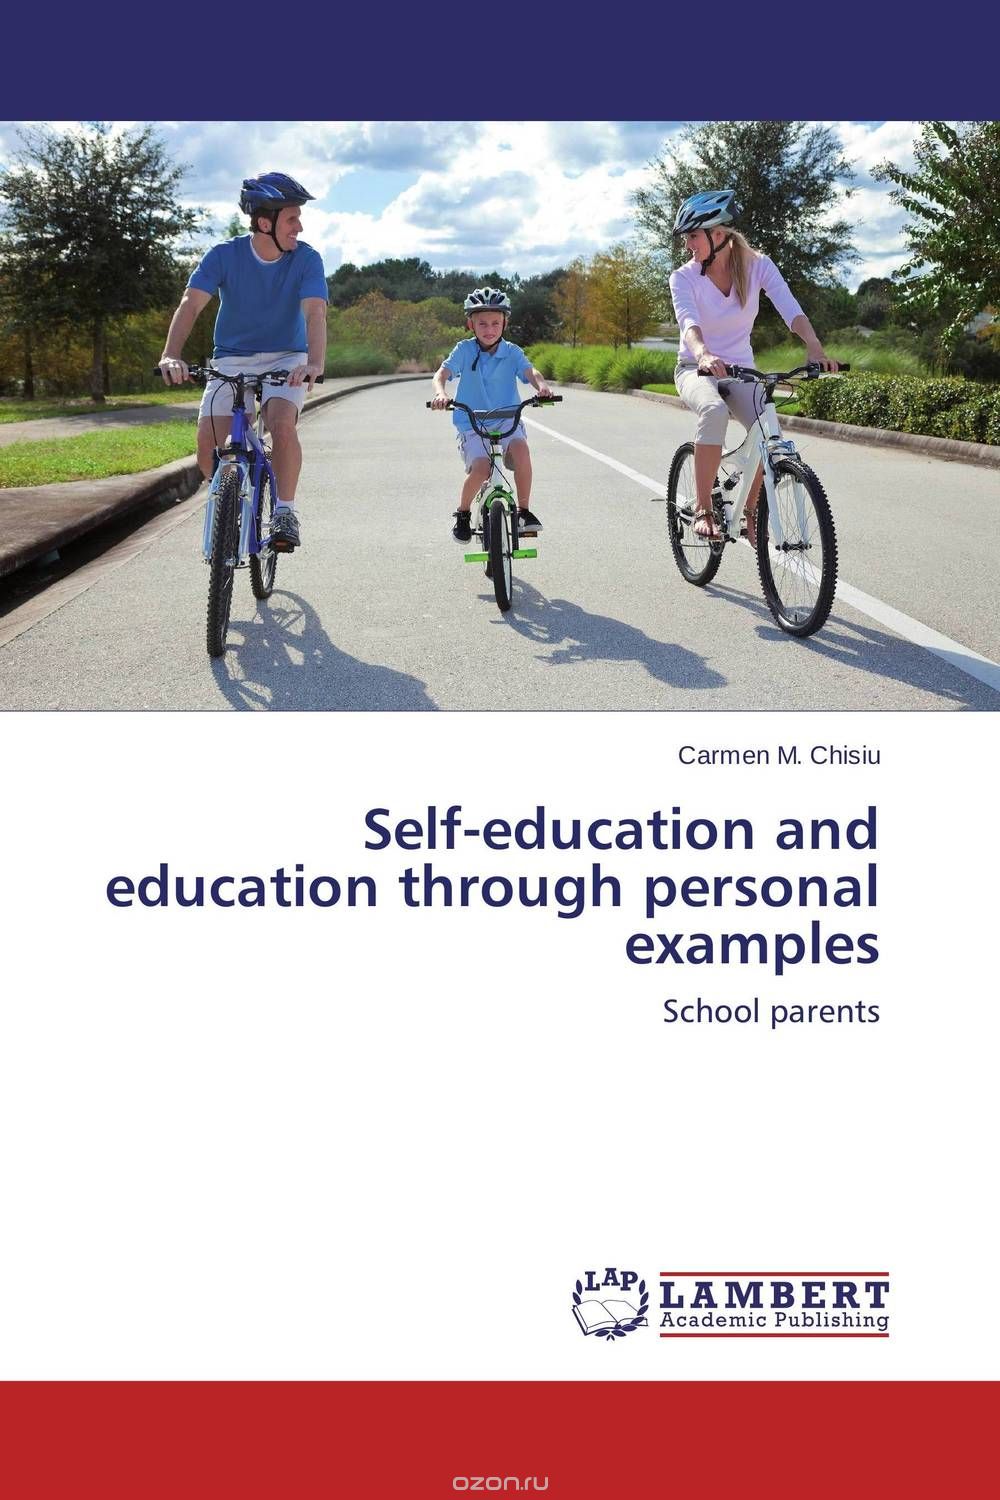 Скачать книгу "Self-education and education through personal examples"